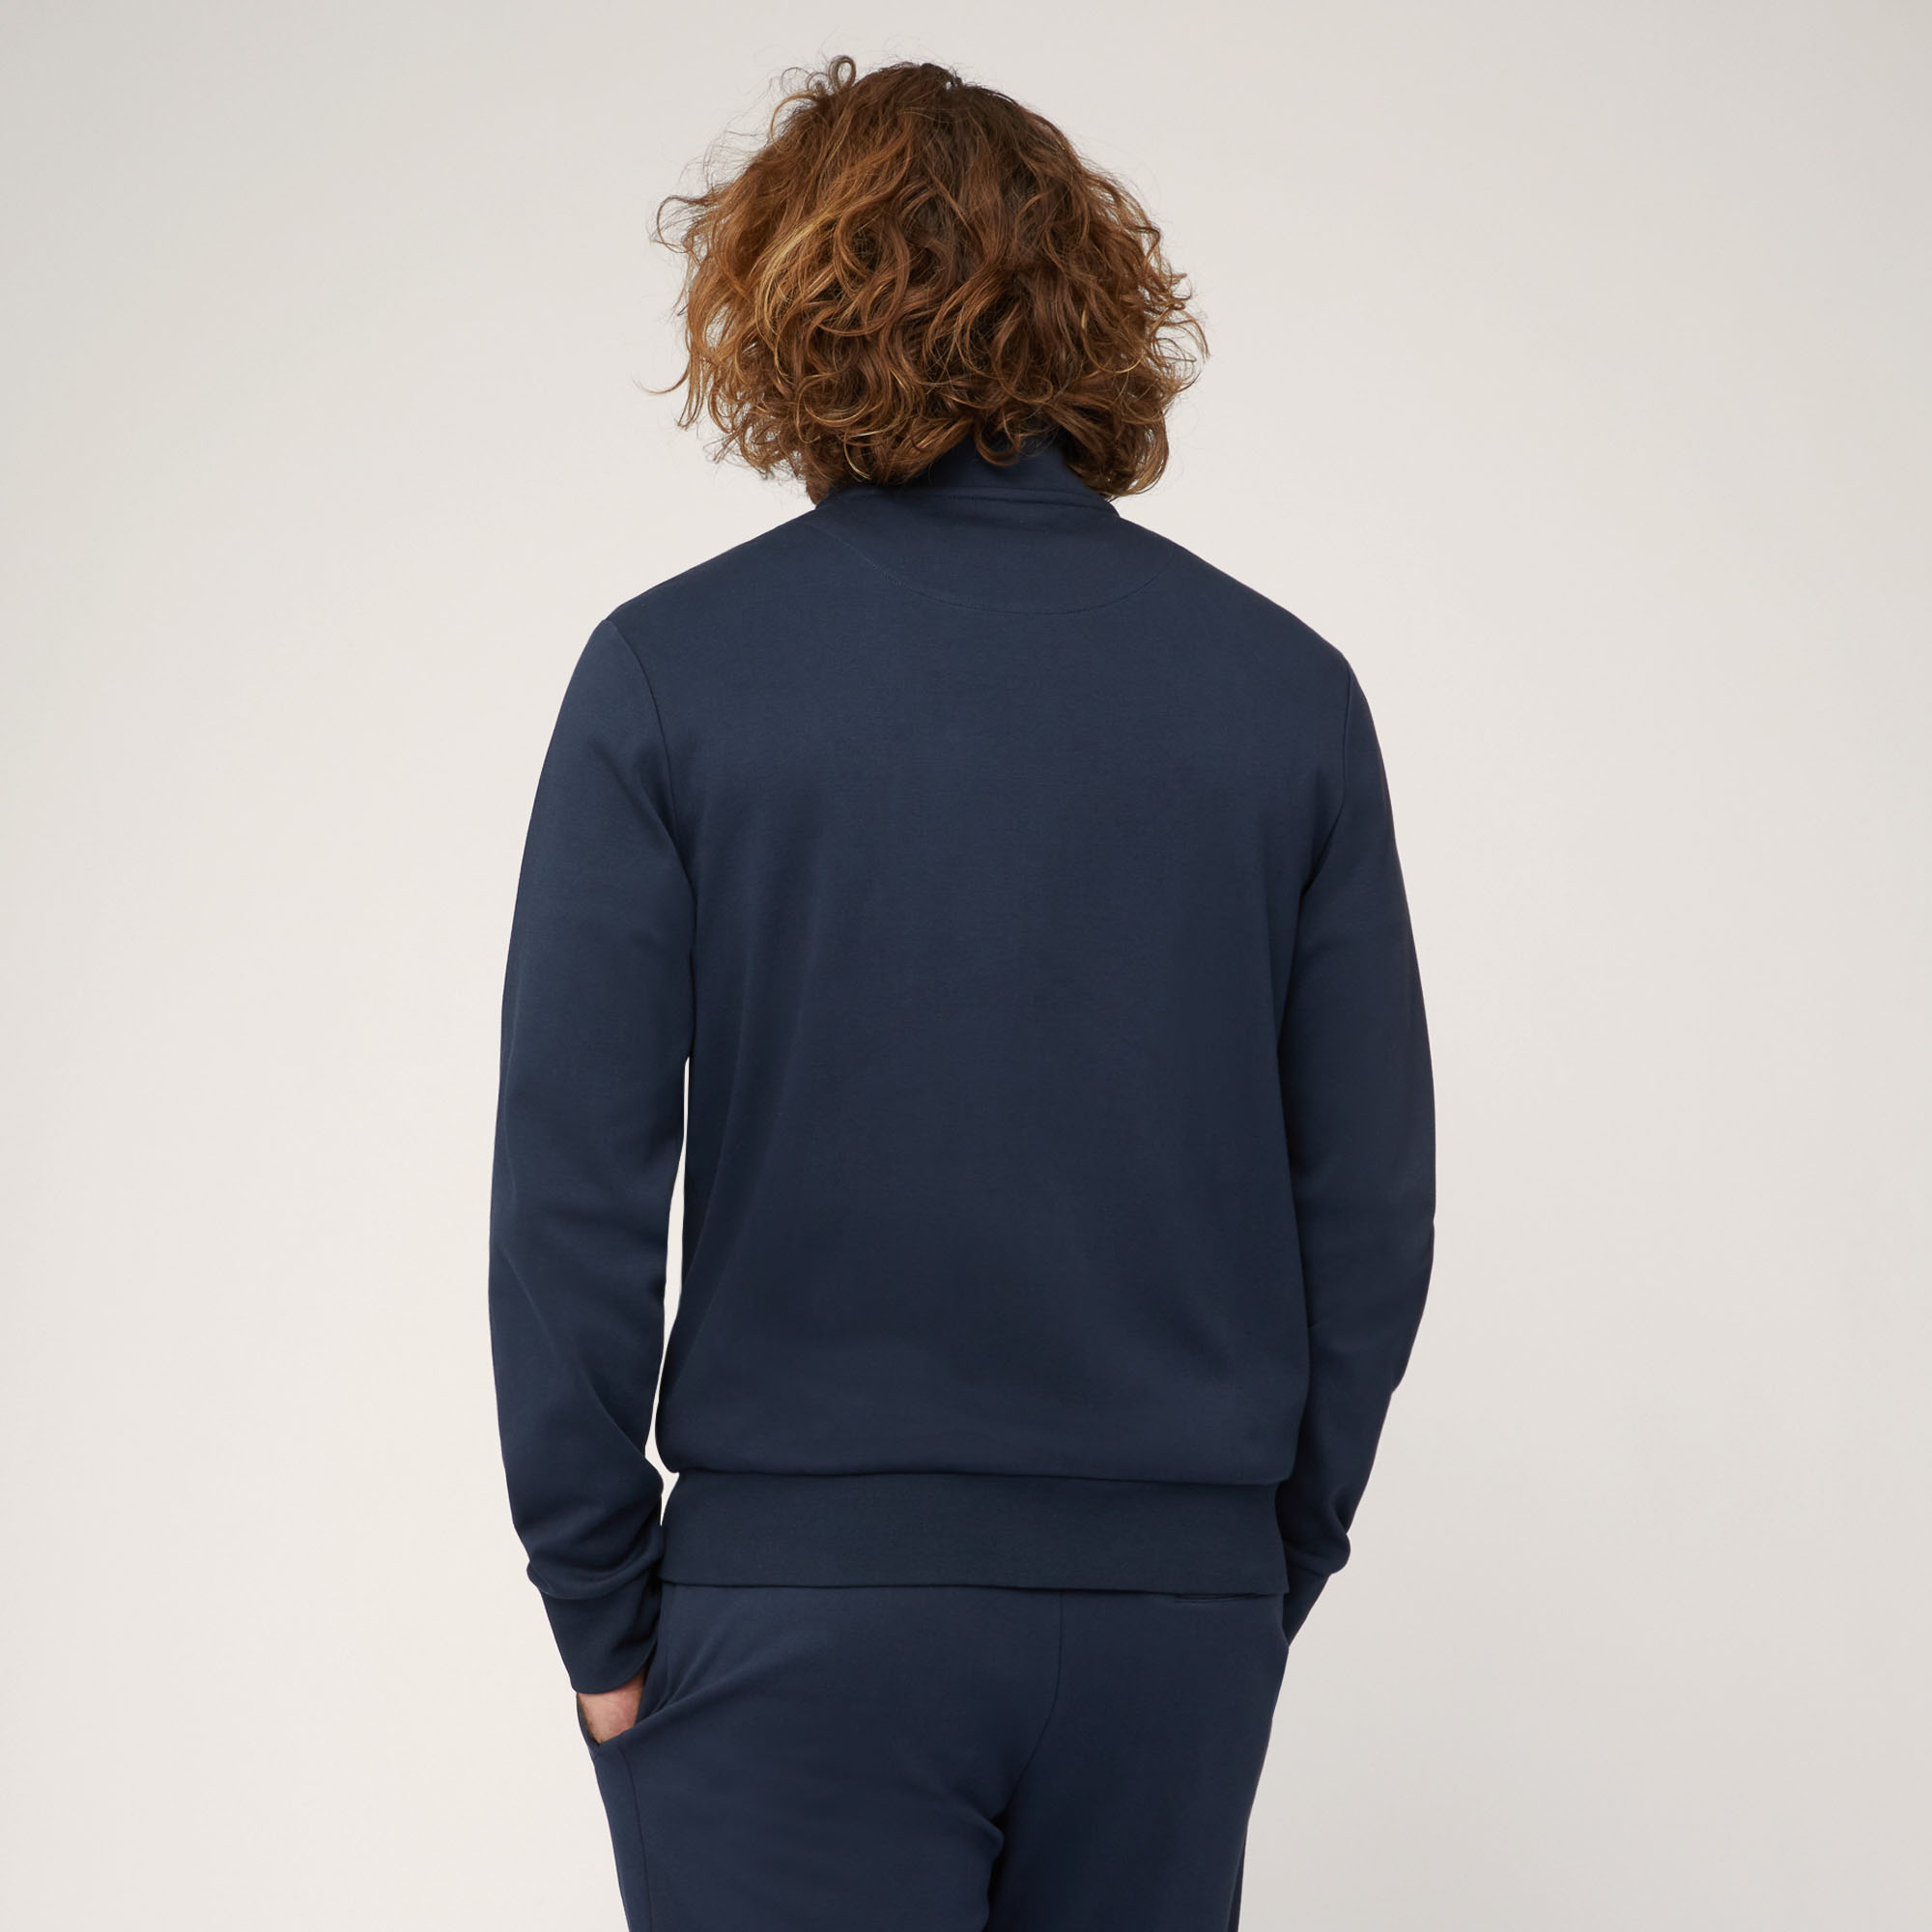 Cotton Full-Zip Sweatshirt with Heat-Sealed Details